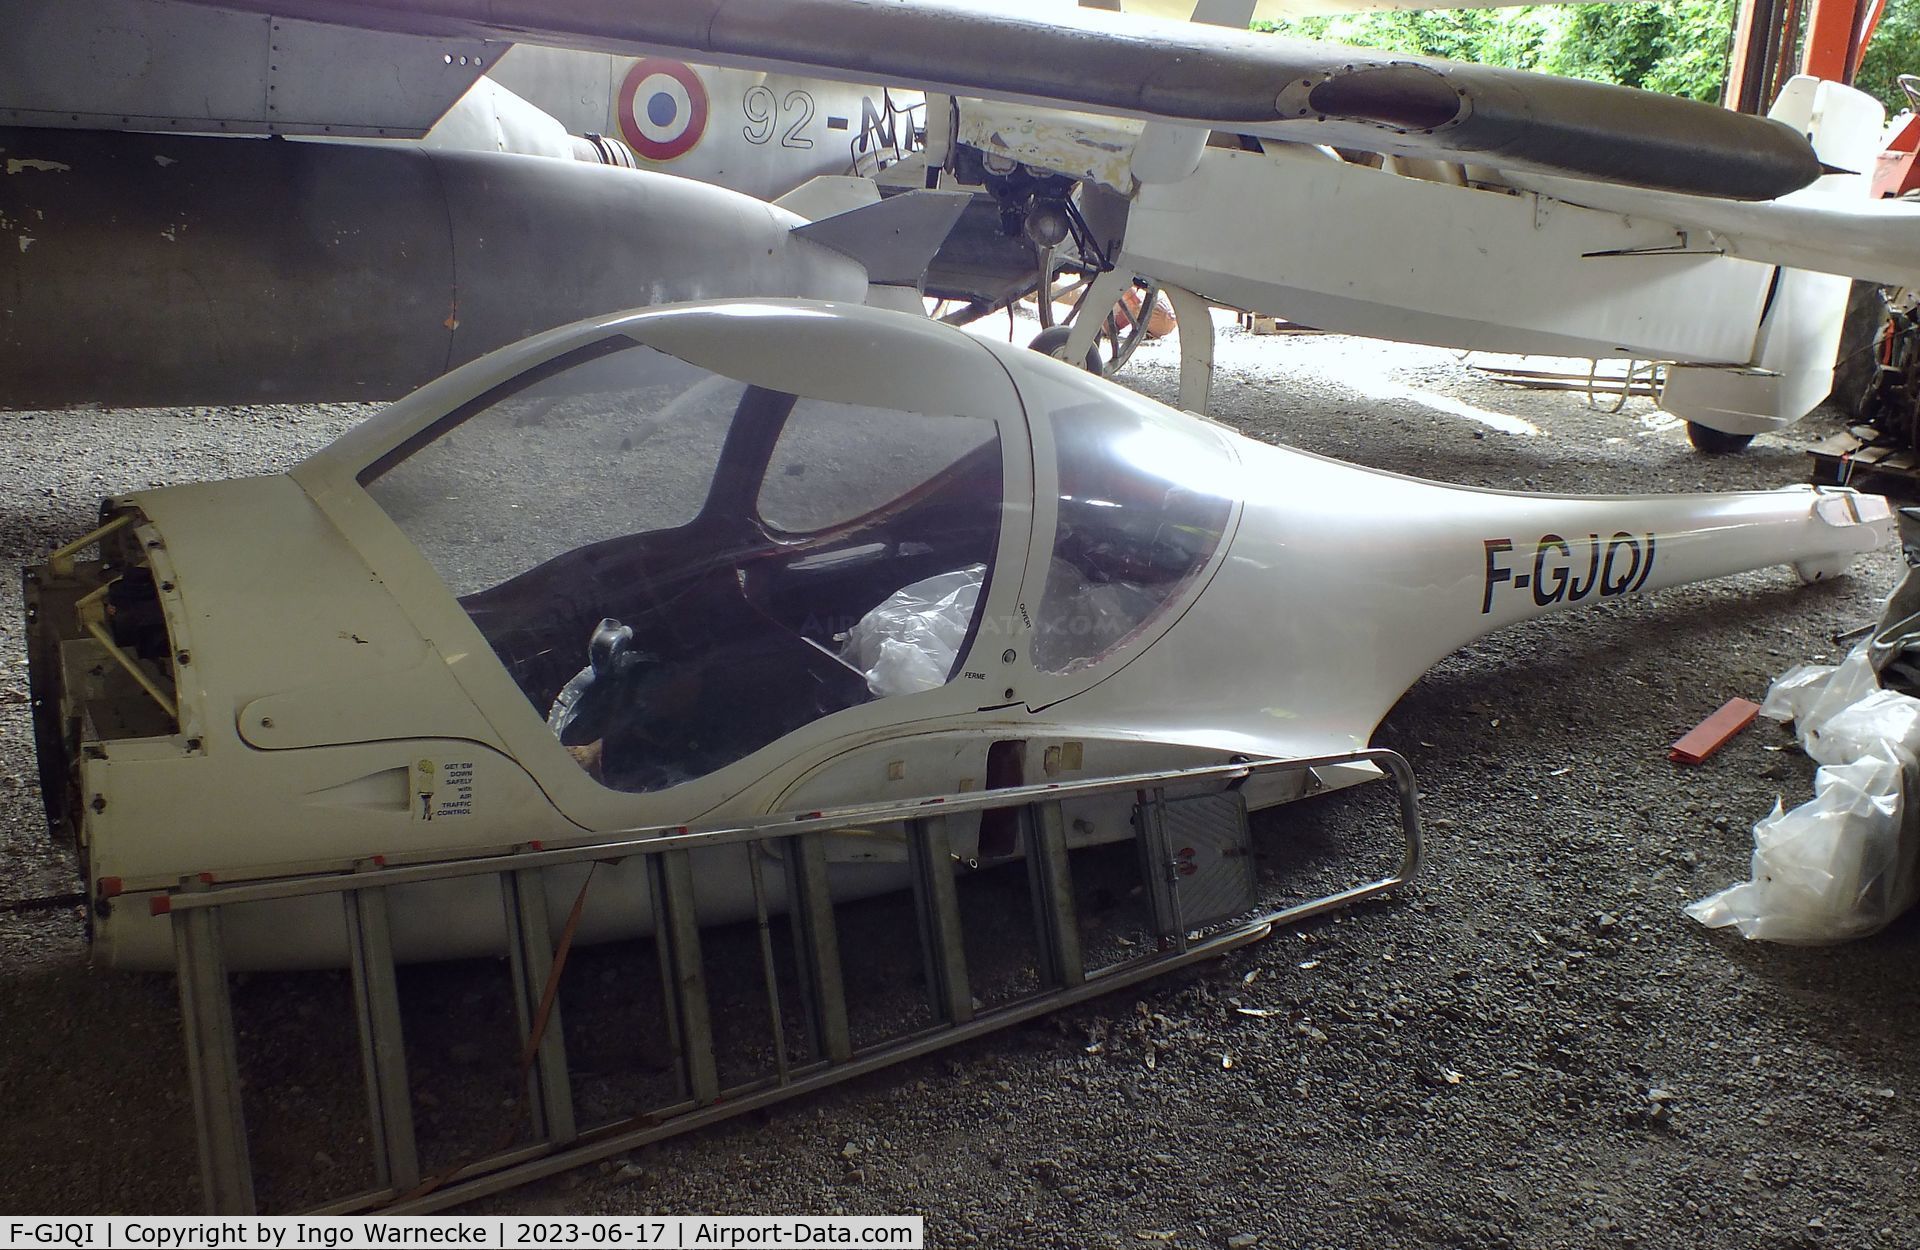 F-GJQI, Robin ATL C/N 133, Robin ATL (minus engine, wings/tailplanes/undercarriage dismounted, awaiting restoration) at the Musee de l'Epopee de l'Industrie et de l'Aeronautique, Albert